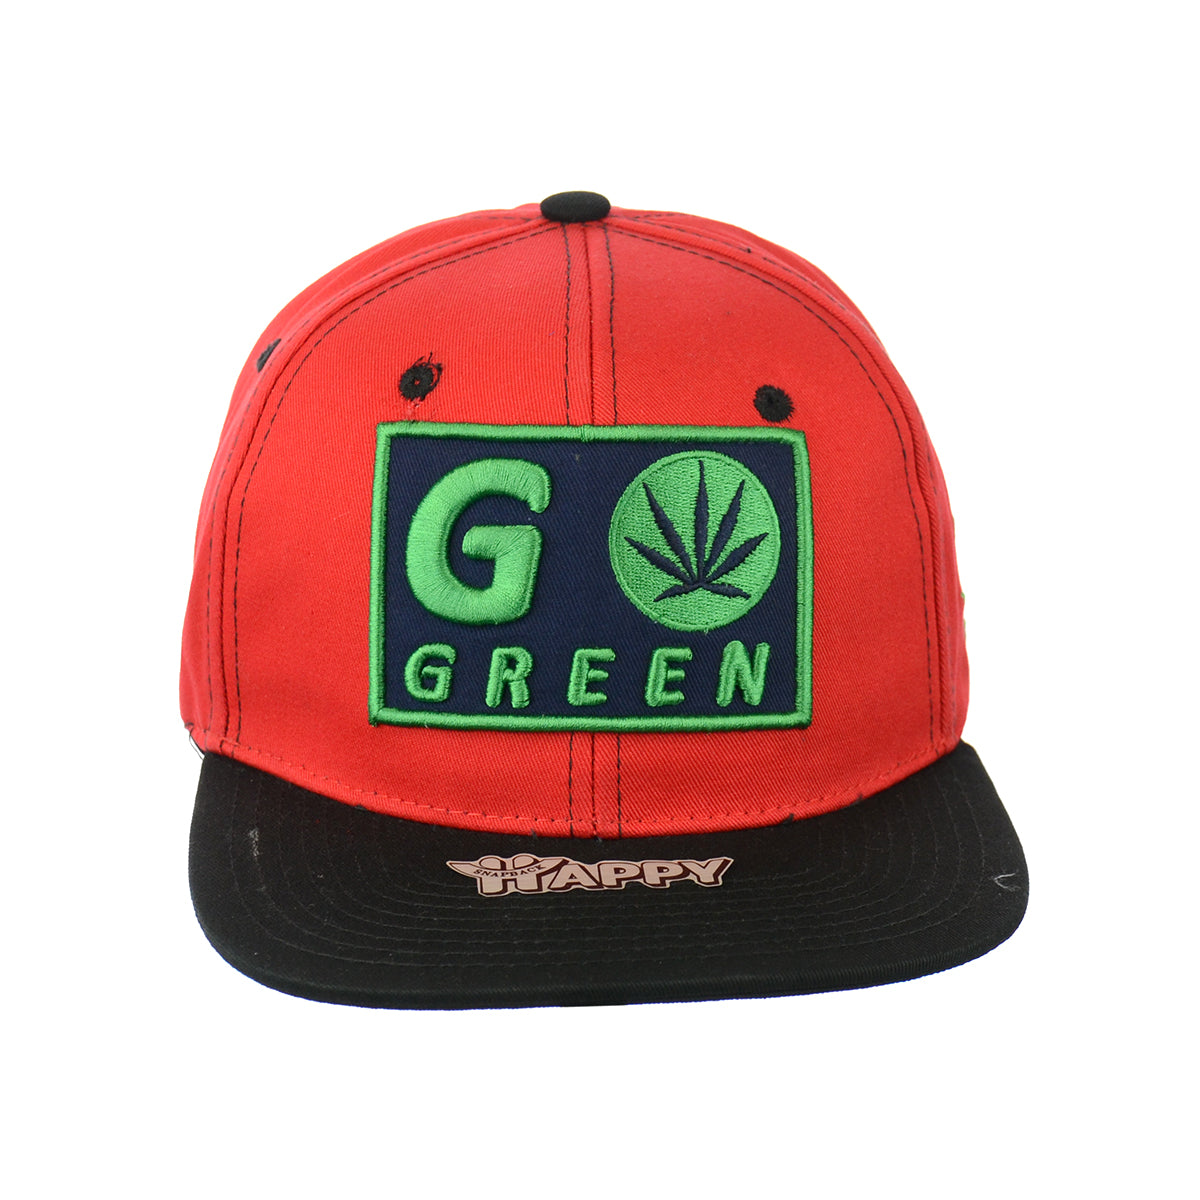 Go Green Leaf Embroidered Snapback Hat 100% Cotton